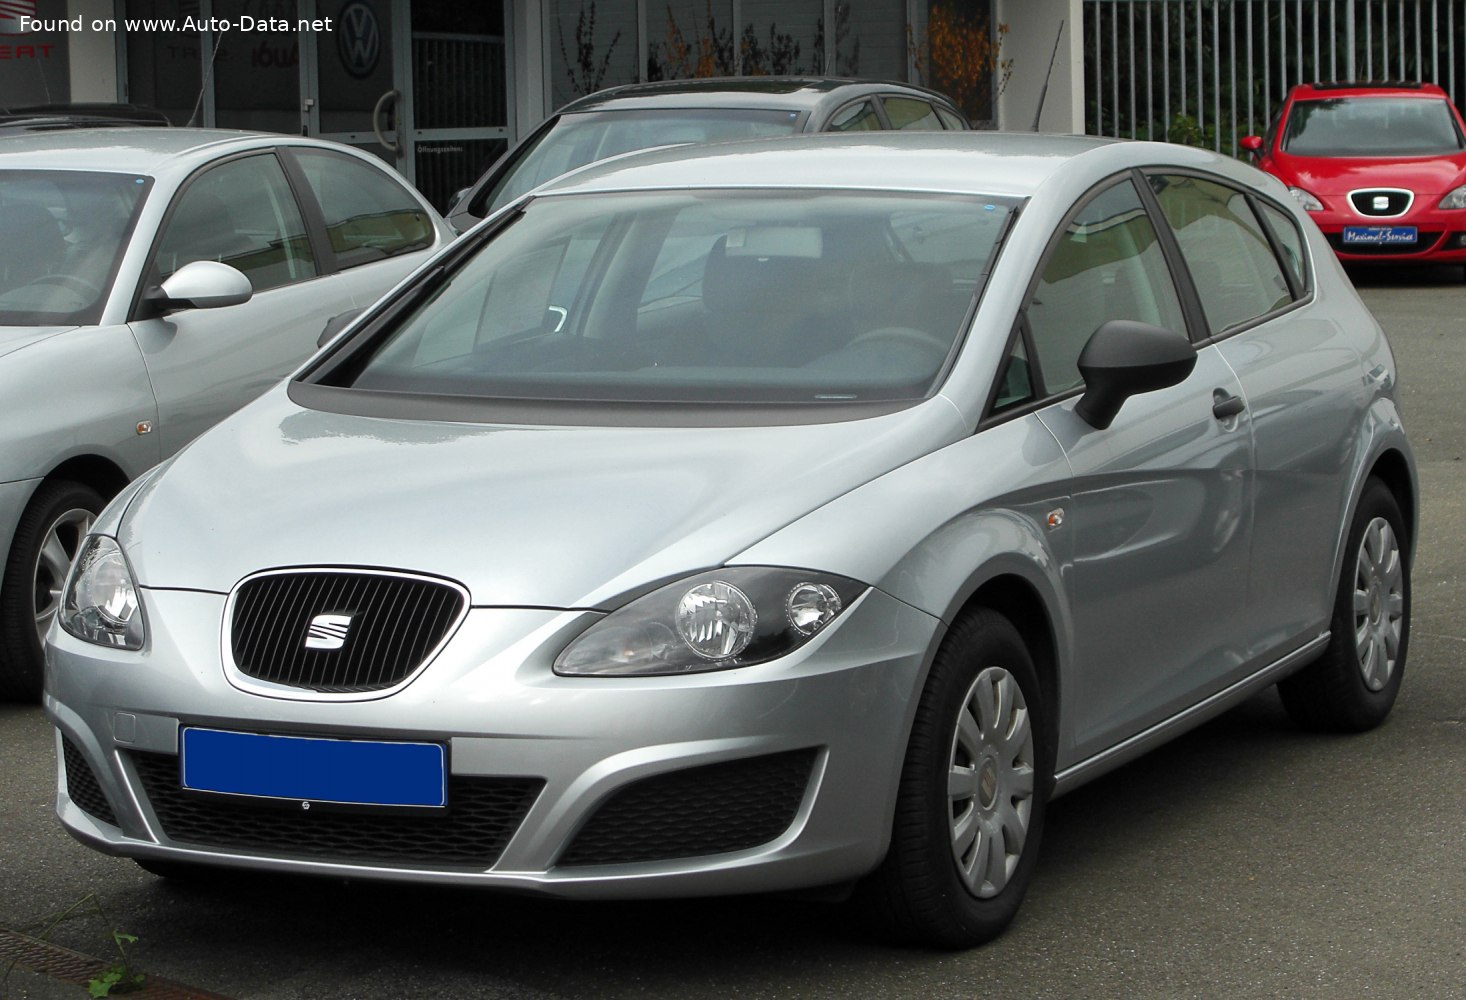 2009 Seat Leon II (1P, facelift 2009) 1.9 TDI PD (105 CV)